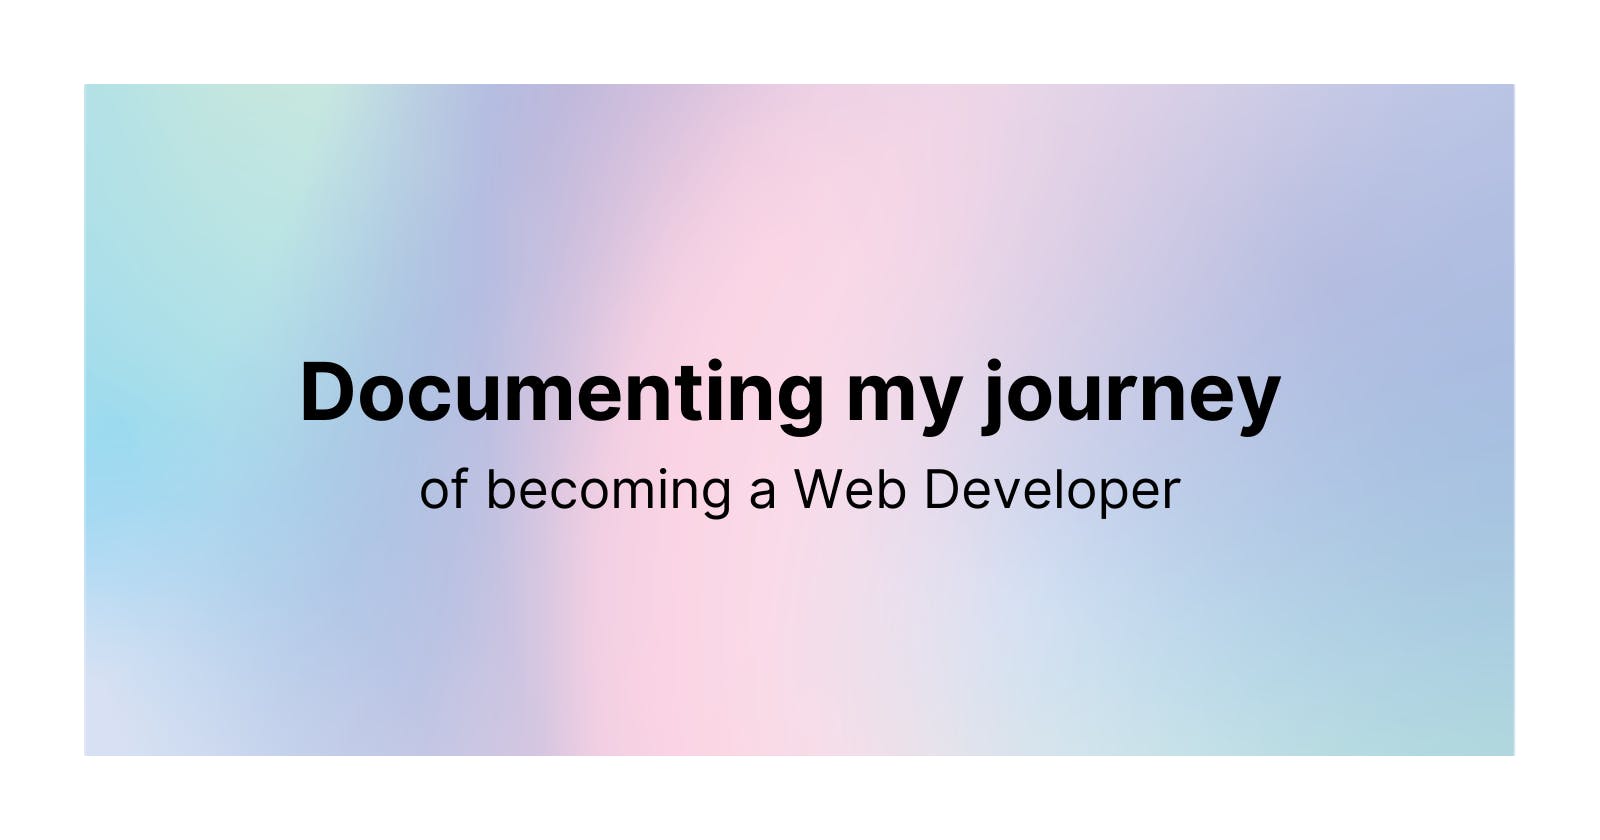 Day 2 of My Web Development Journey.